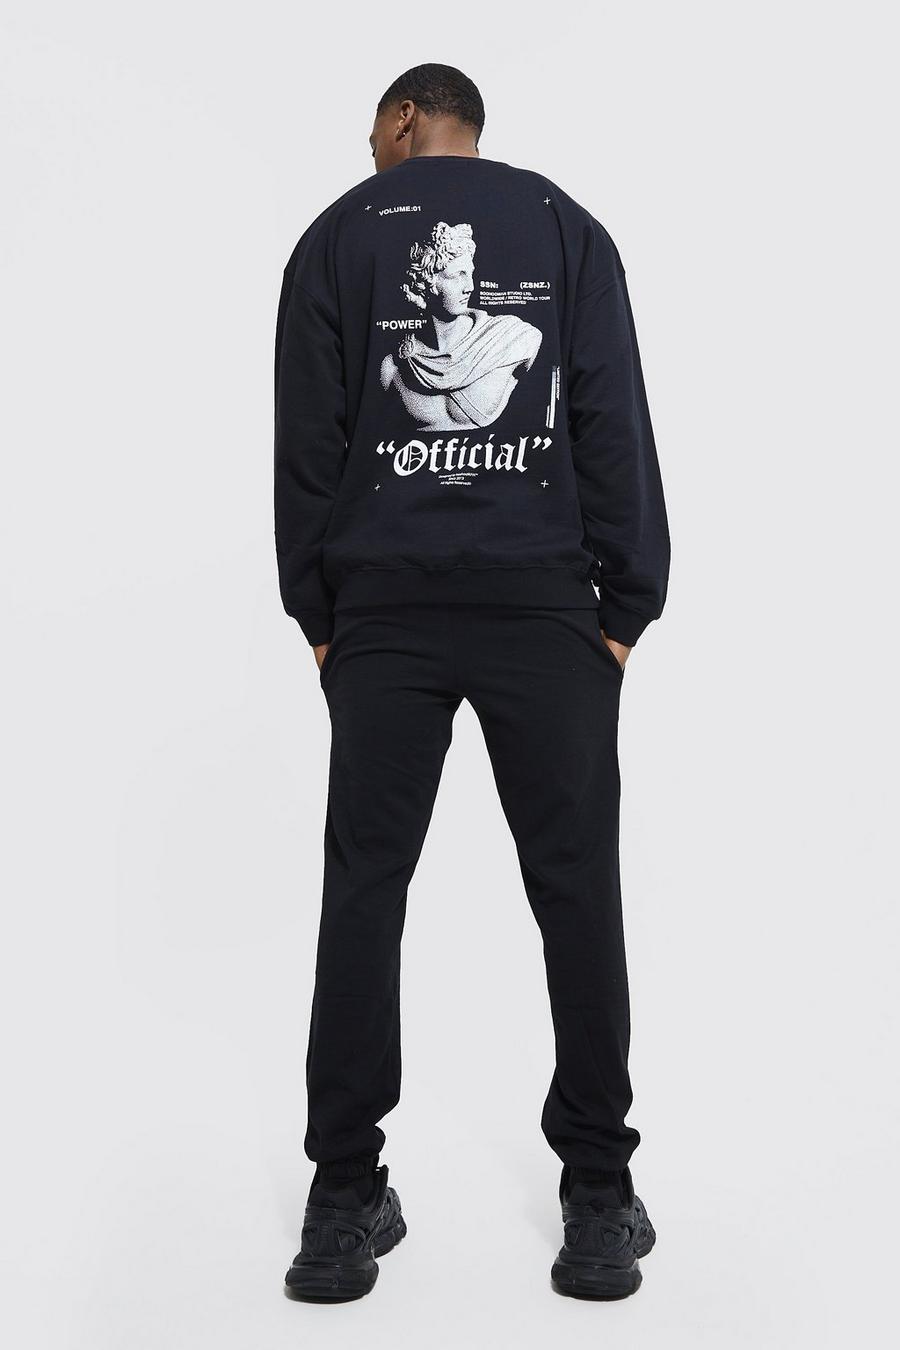 Black Oversized Official Sweatshirt Tracksuit image number 1